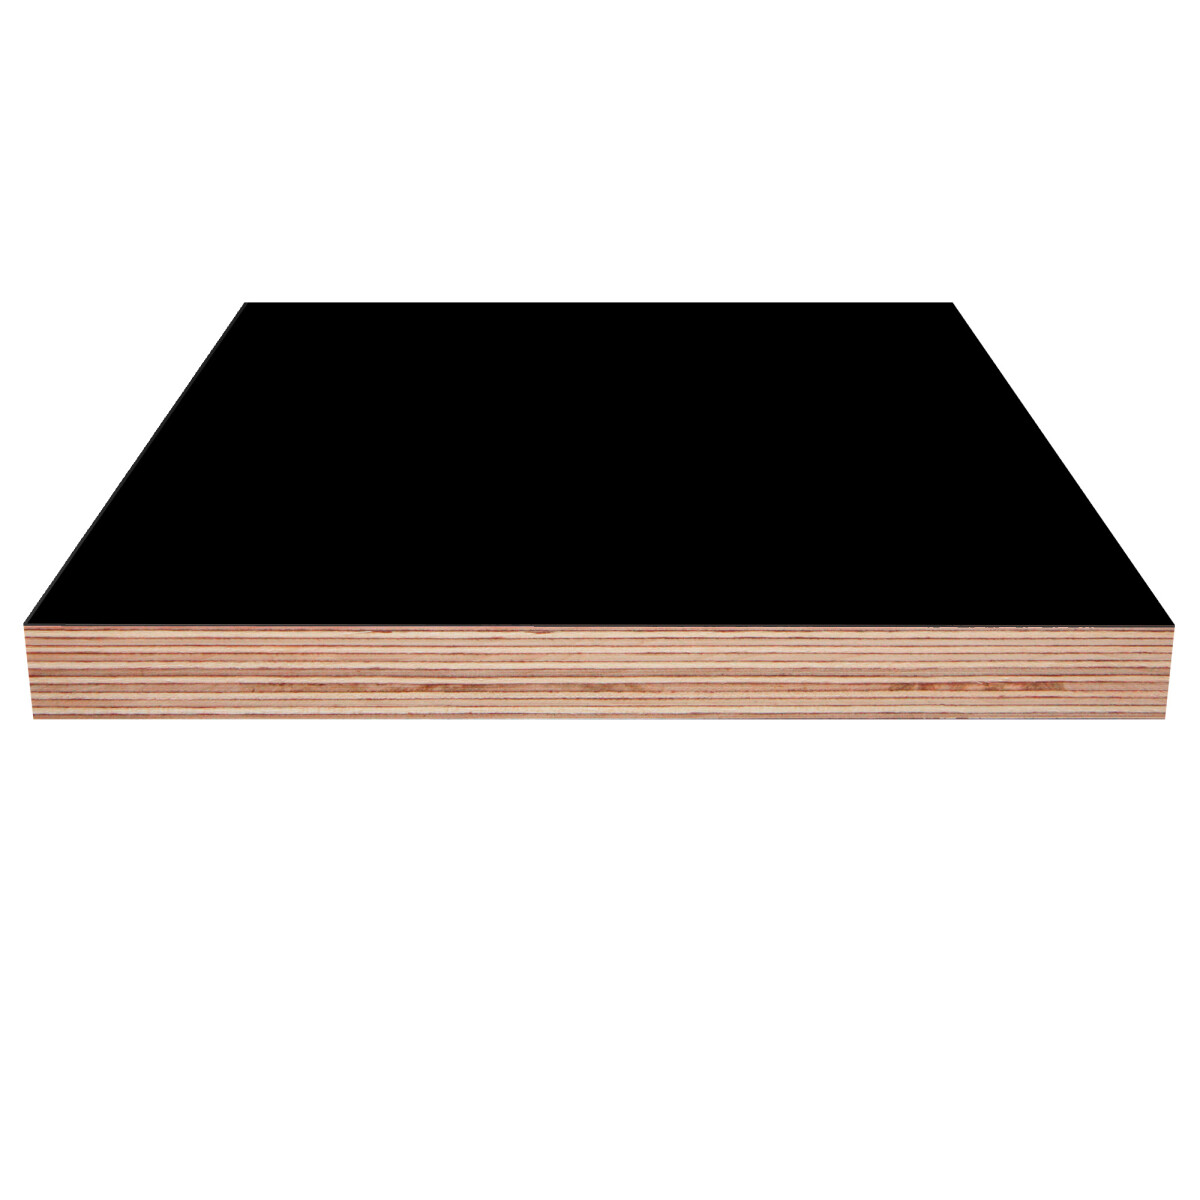 3x Qualitäts-Sperrholz 10mm Birke 120x50 Platte Holz Multiplex Modellbau basteln 